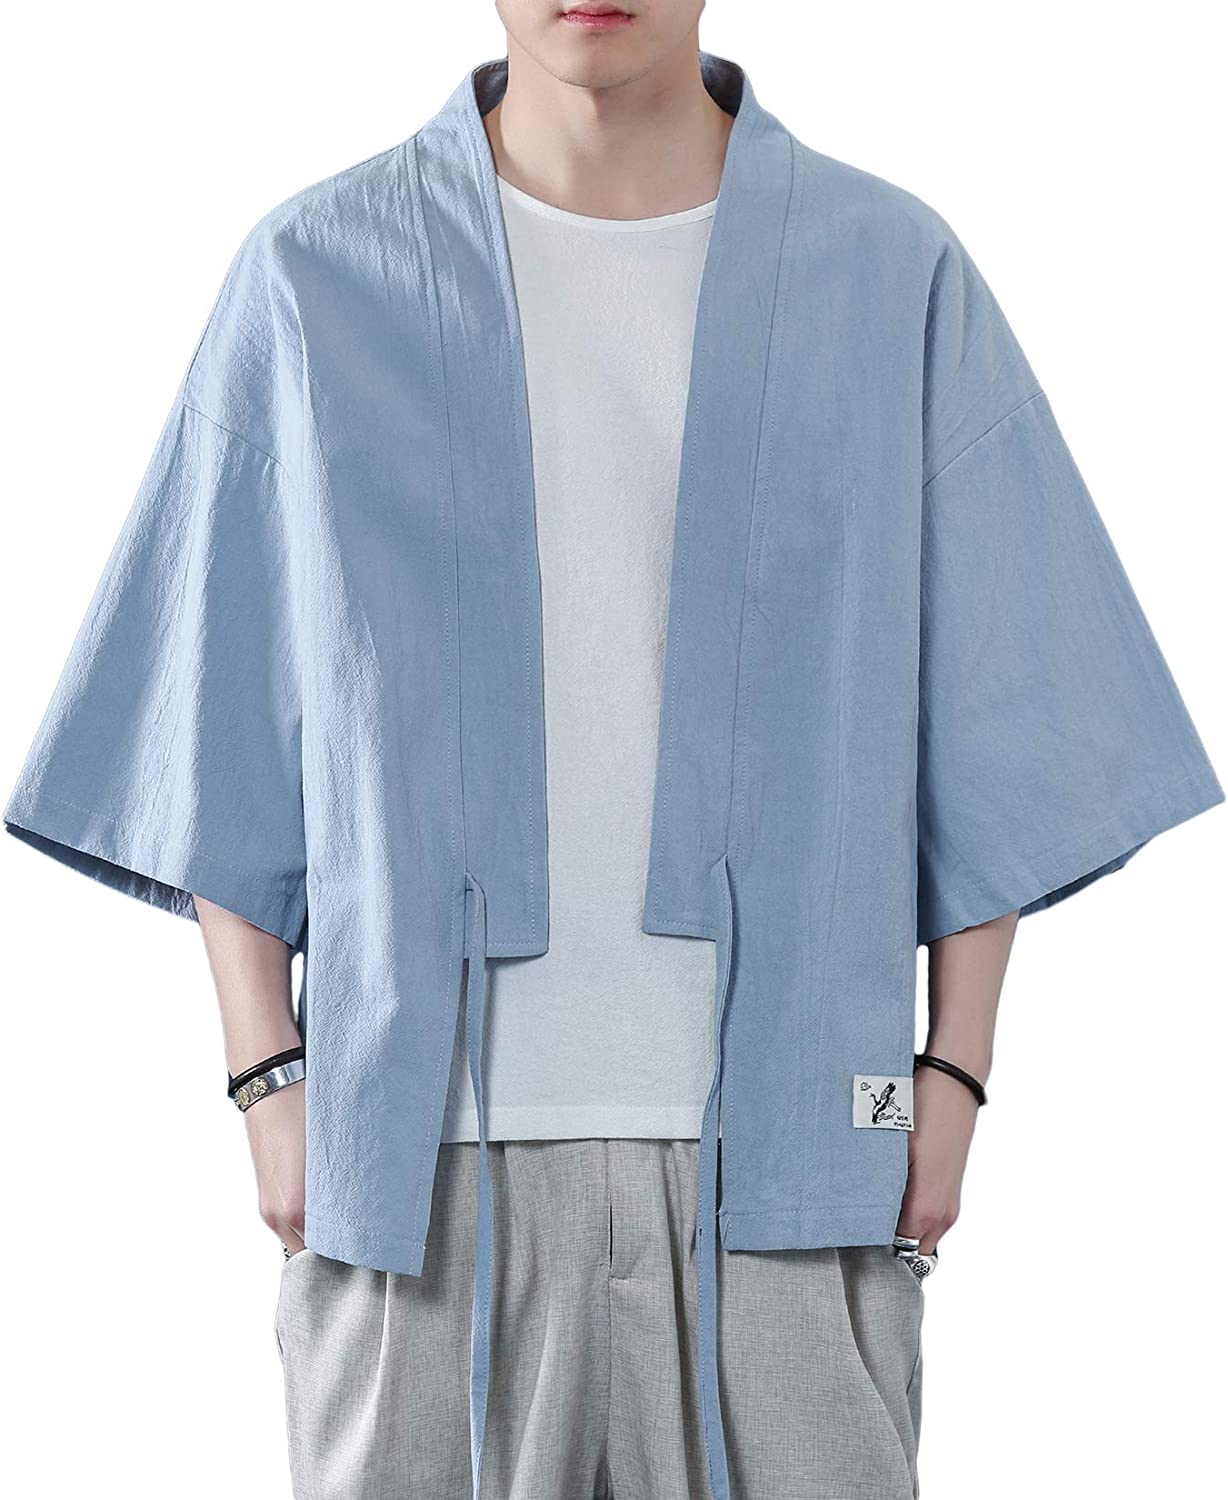 DOSLAVIDA Men's Kimono Cardigan Jackets Casual Cotton Linen Open Front Japanese Yukata Lightweight Seven Sleeves Coat 